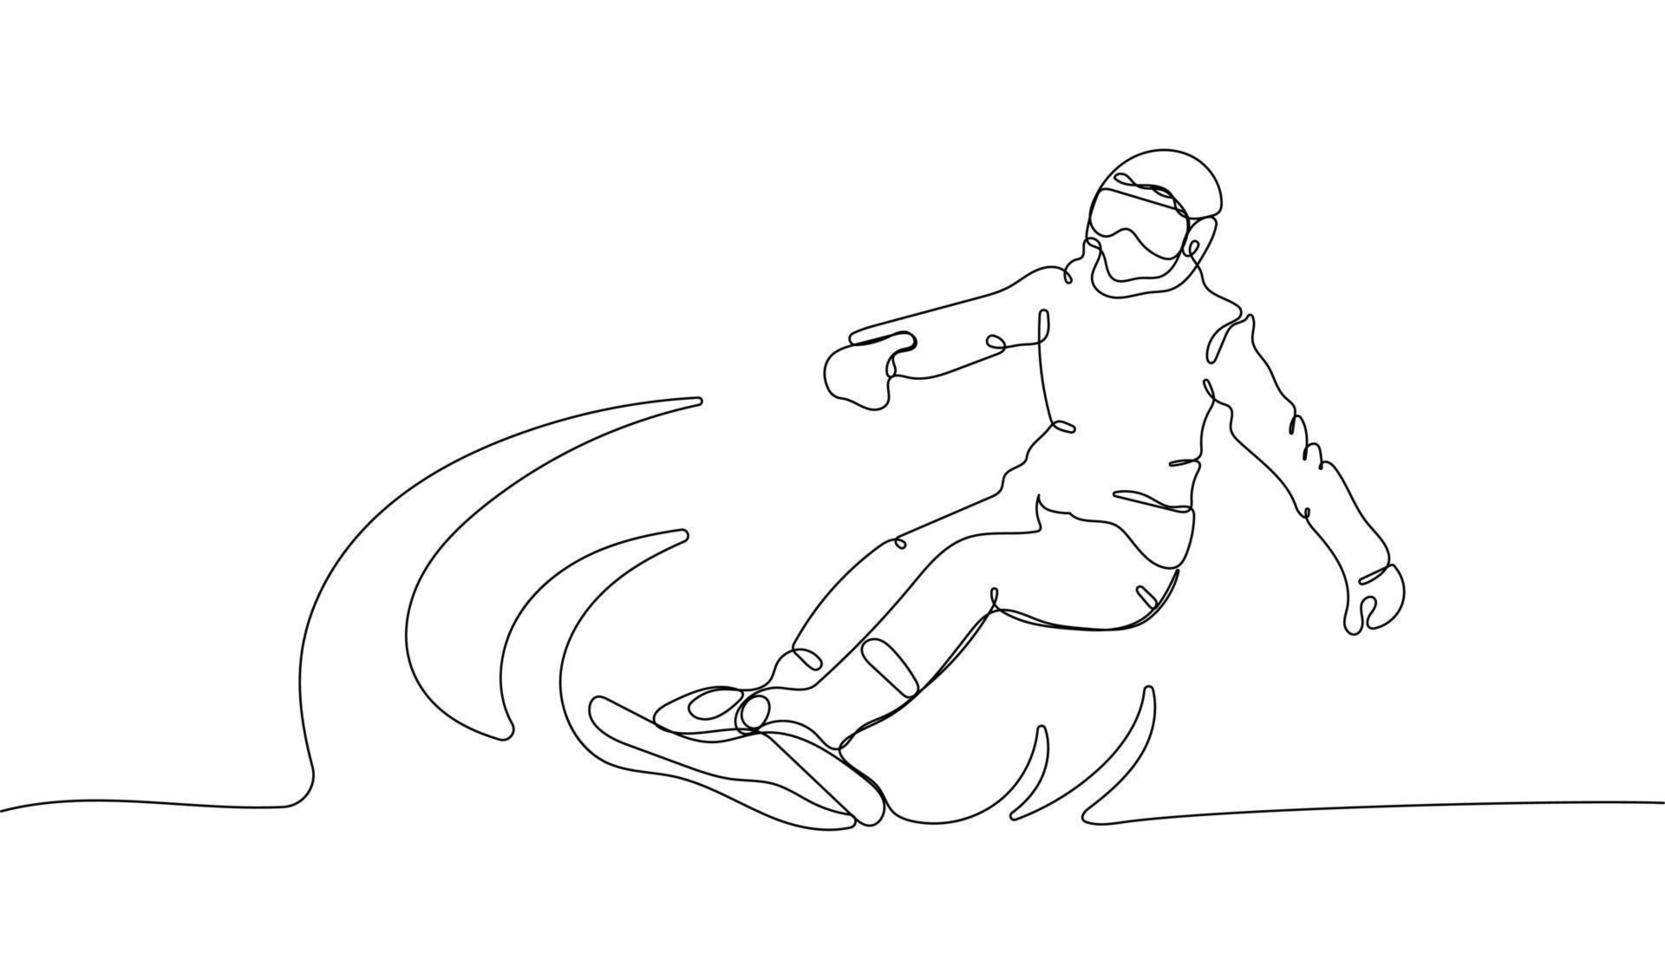 continu un ligne dessin de snowboard athlète vecteur